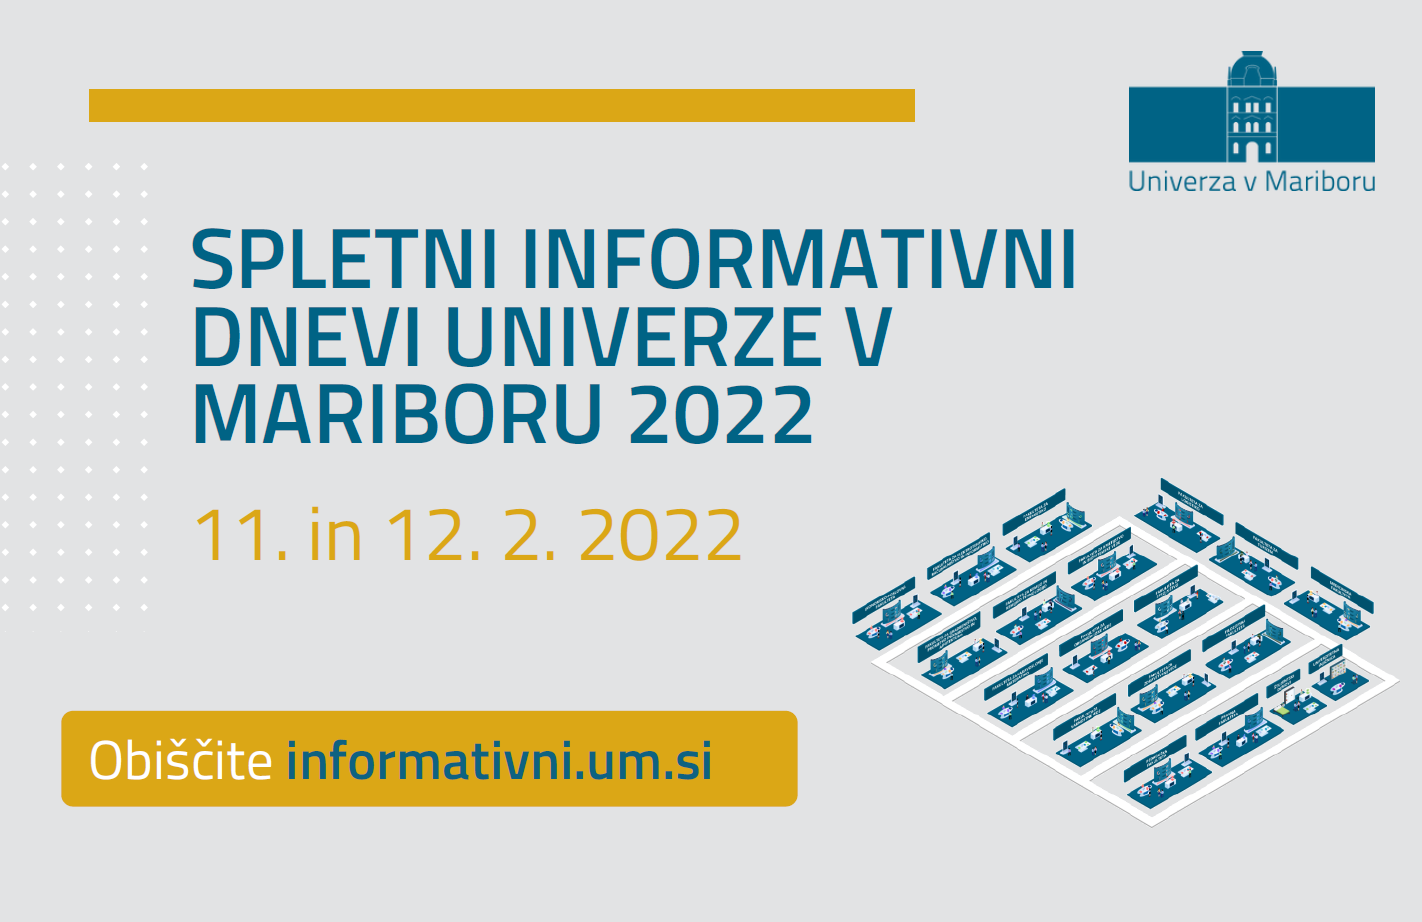 UM_InformativniUM